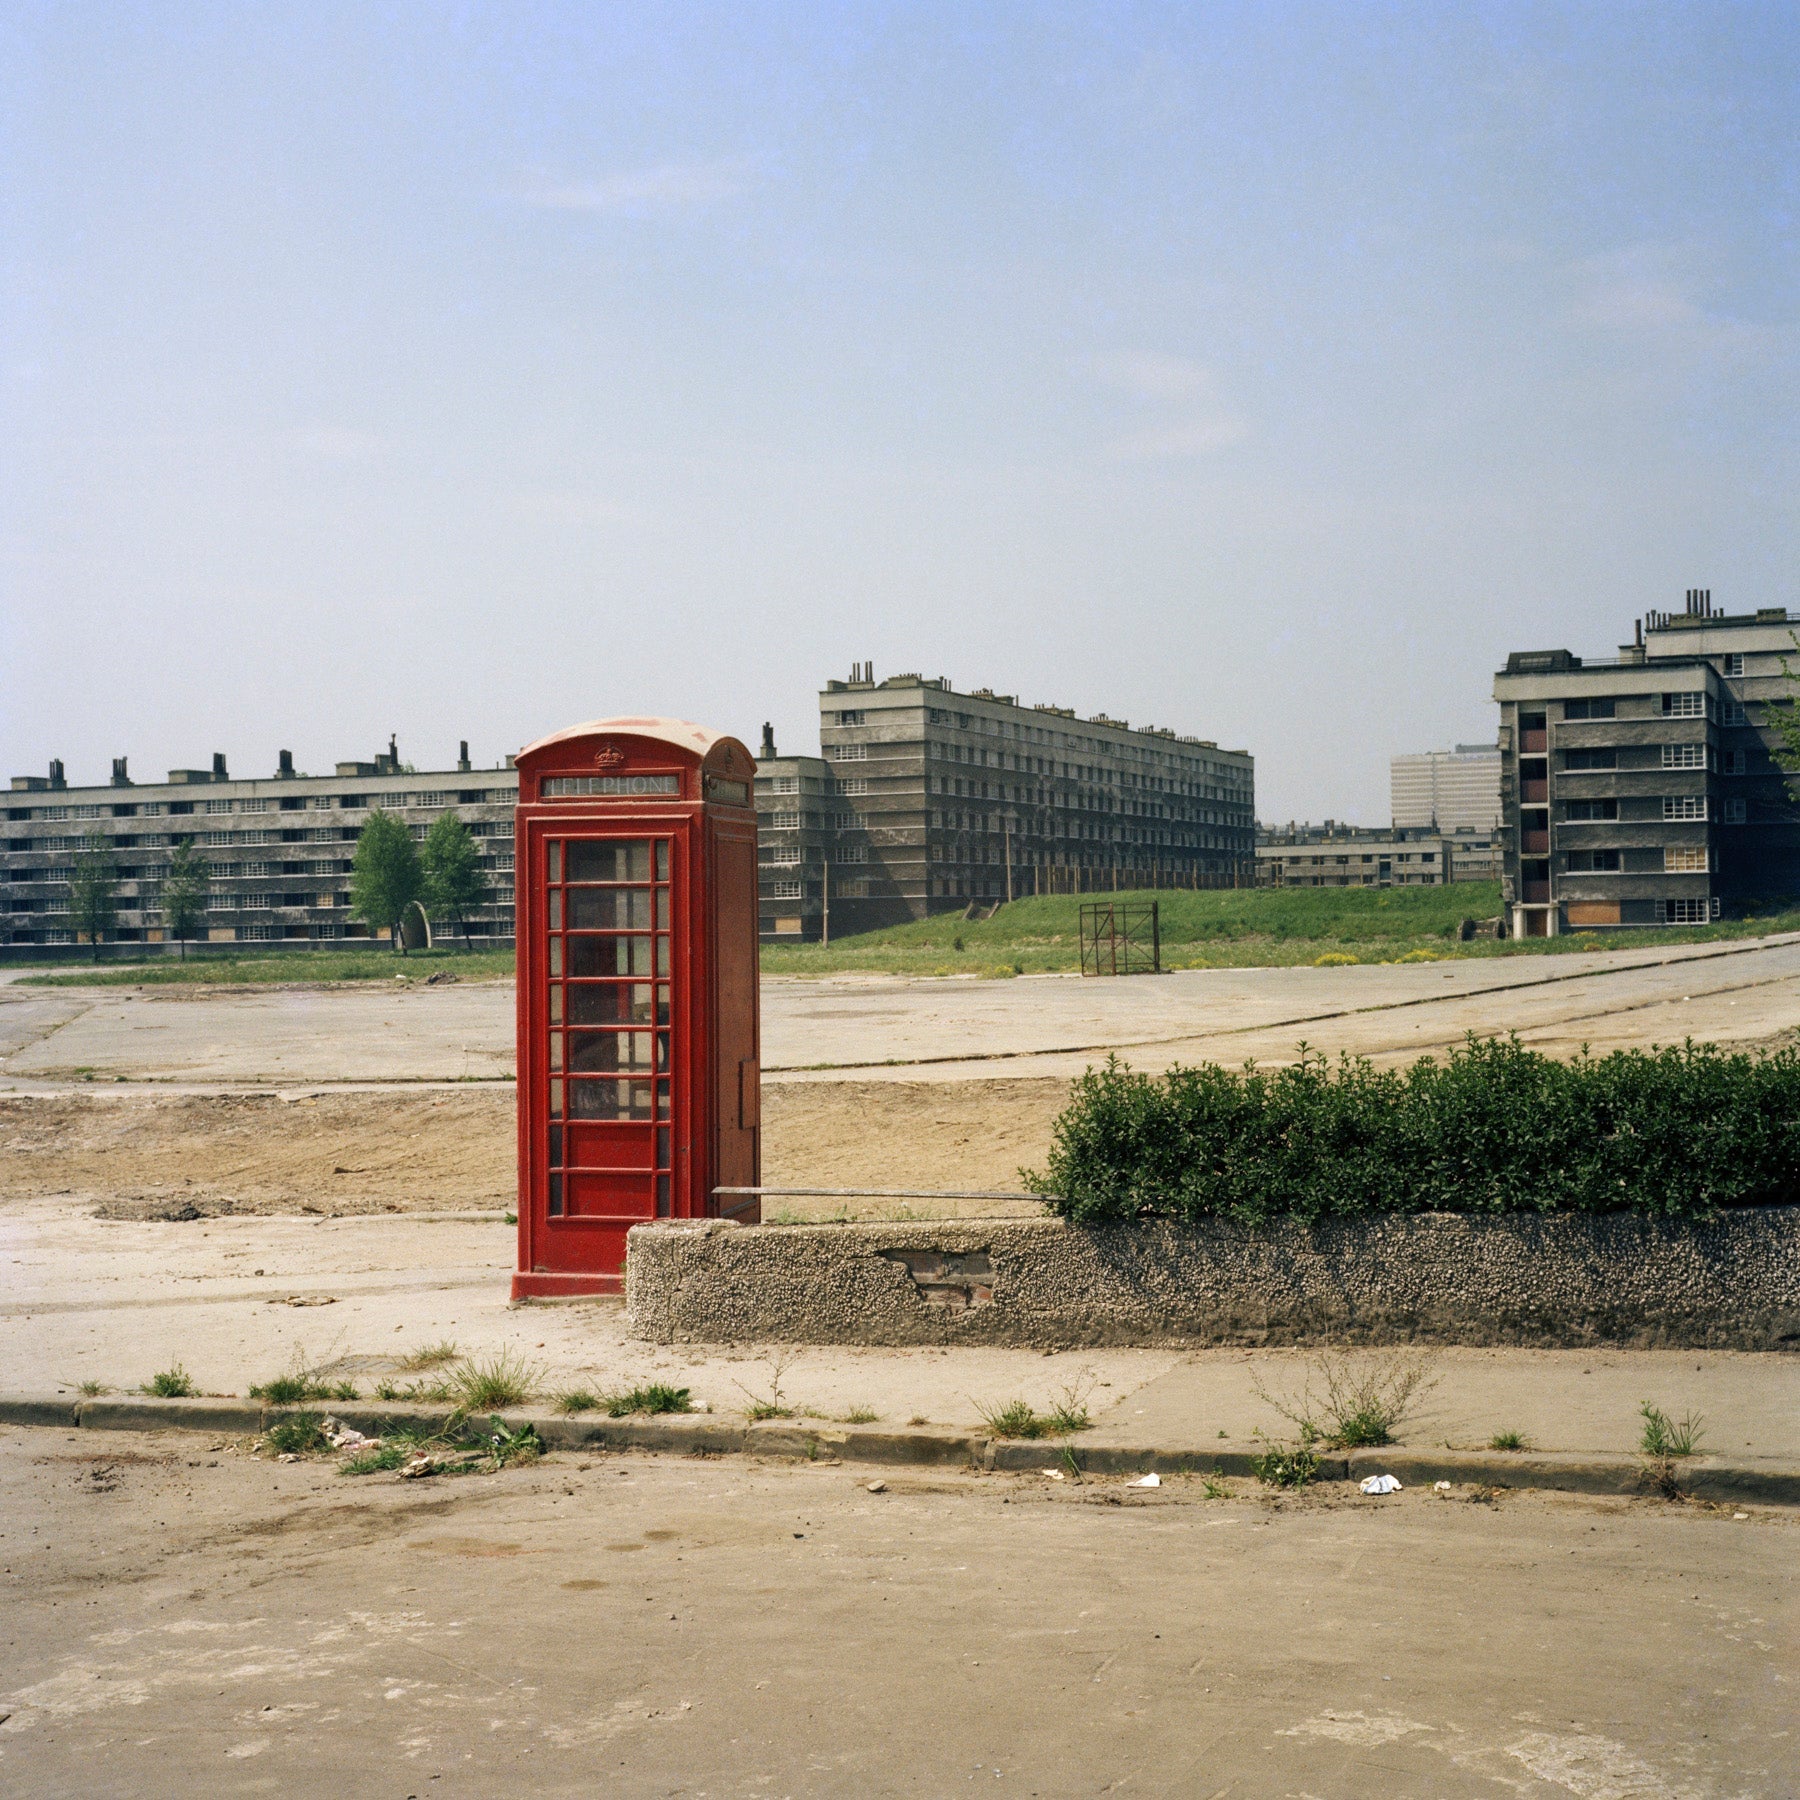 The Kitson House telephone, Quarry Hill Flats, Leeds, 1978 - 7x9" Print